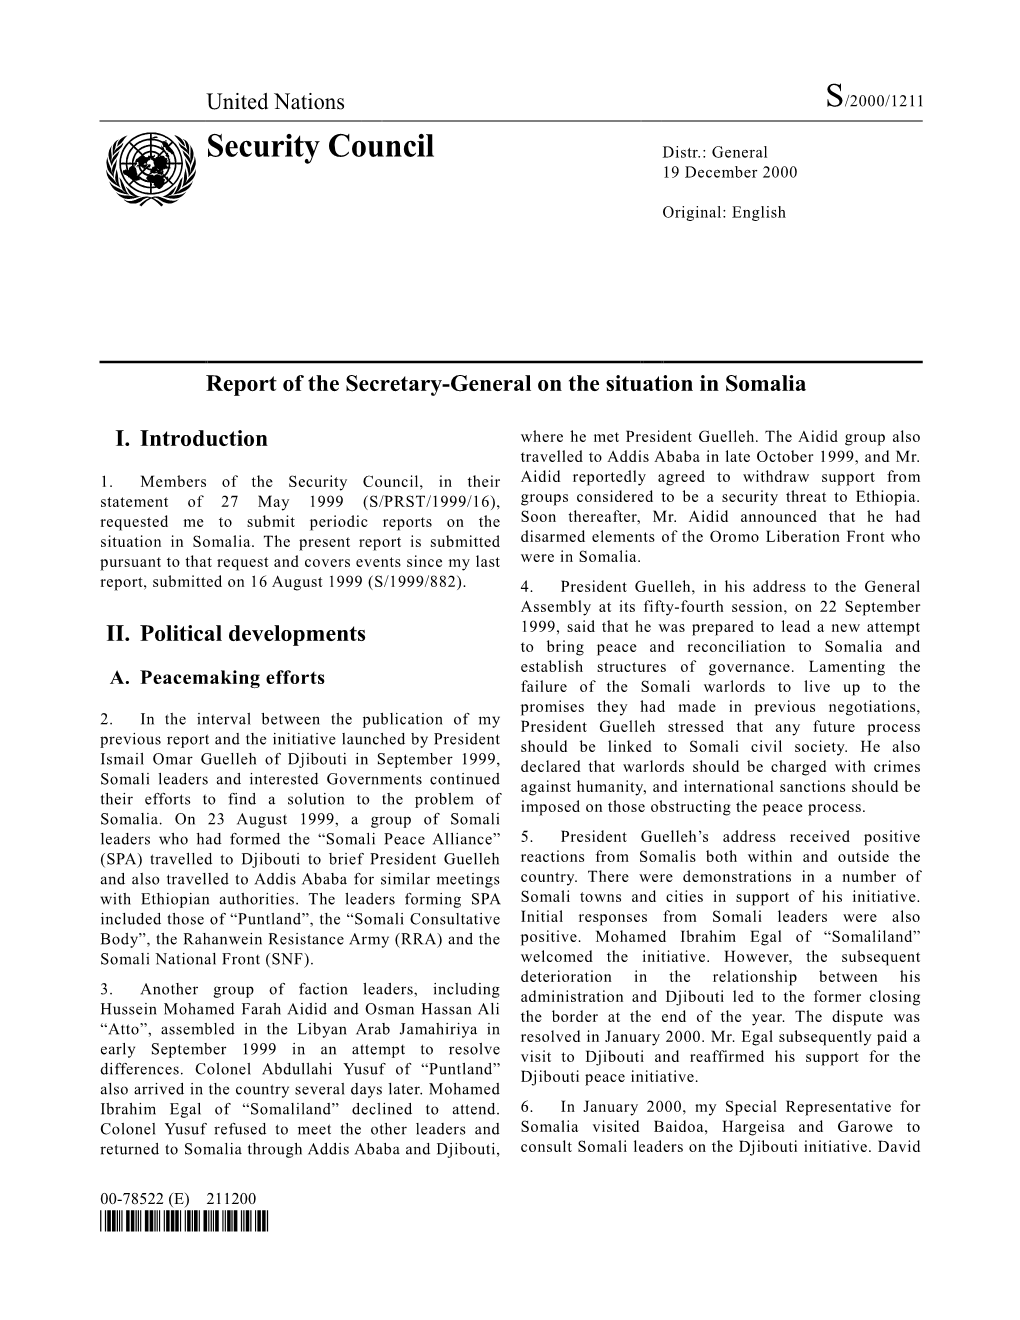 Security Council Distr.: General 19 December 2000